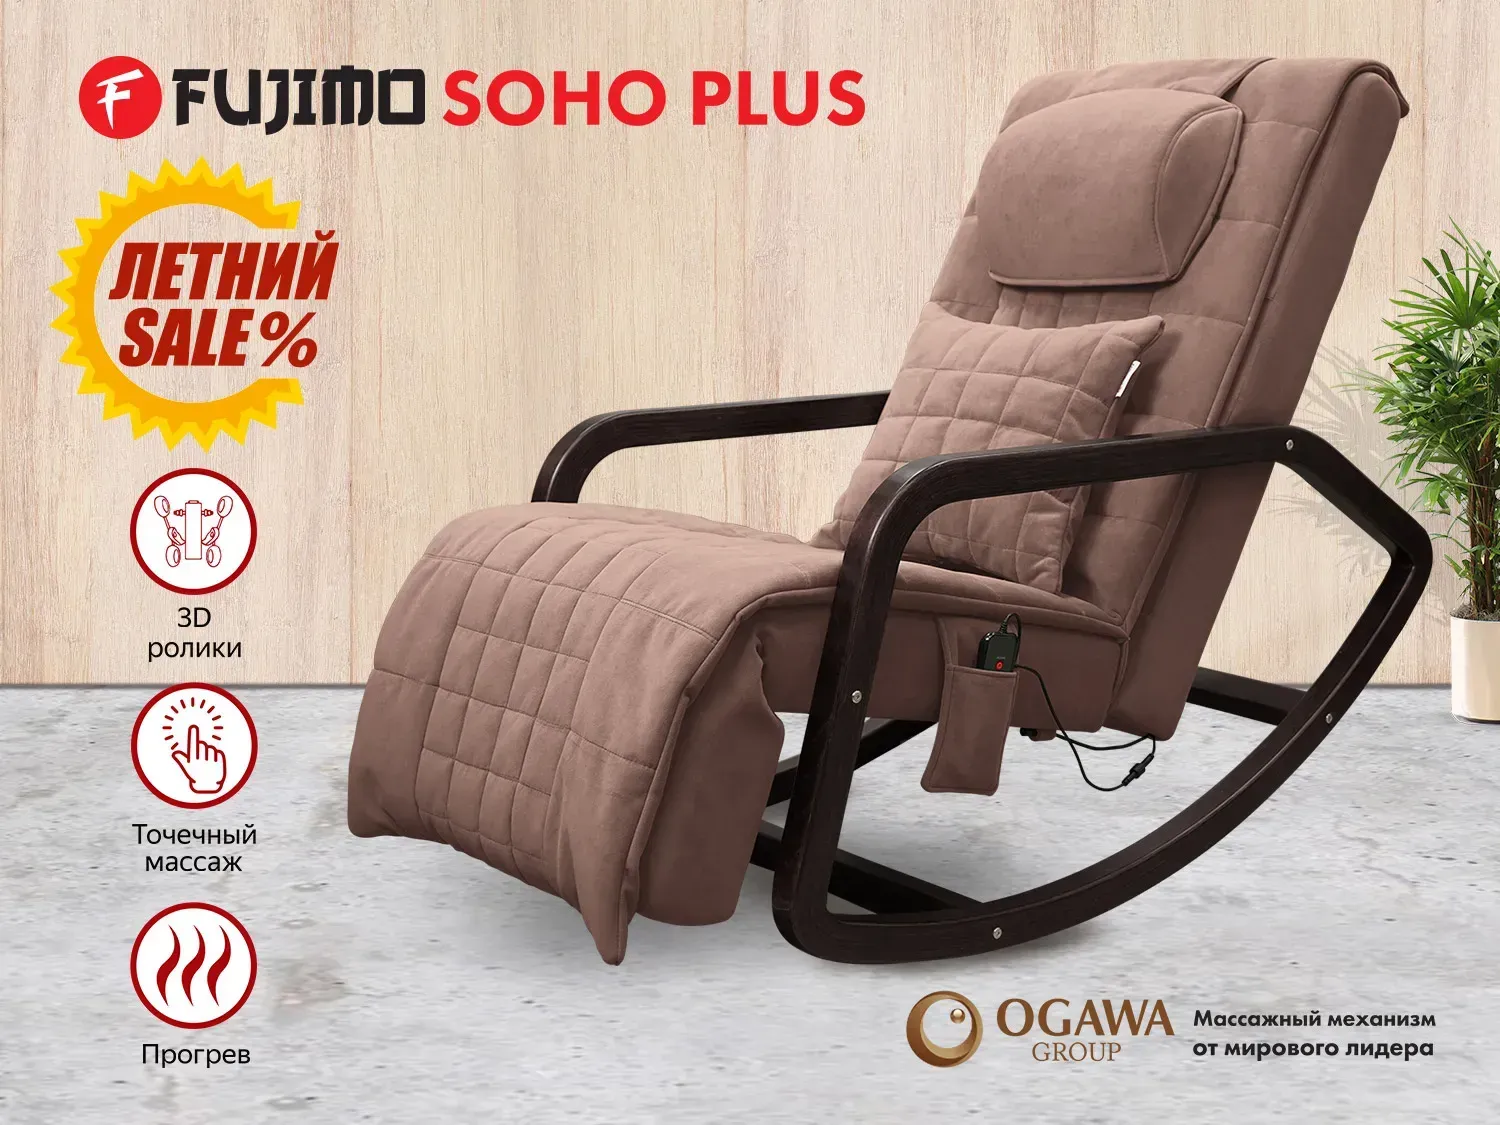 Массажное кресло качалка FUJIMO SOHO Plus F2009 Шоколад (TONY8) - 1 